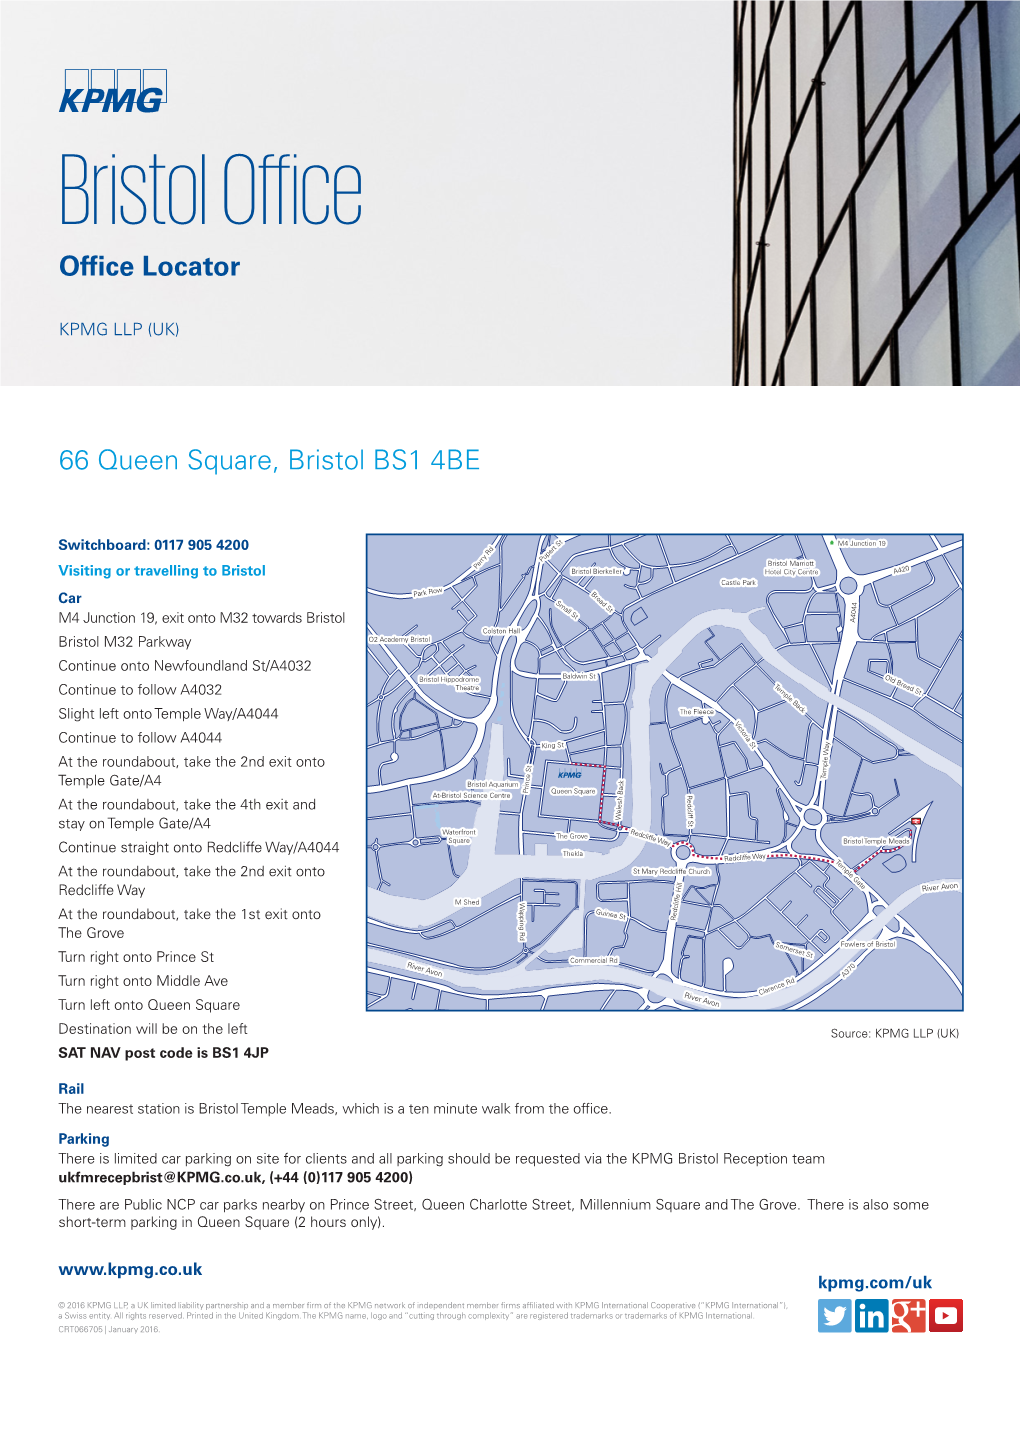 KPMG Bristol Office Locator